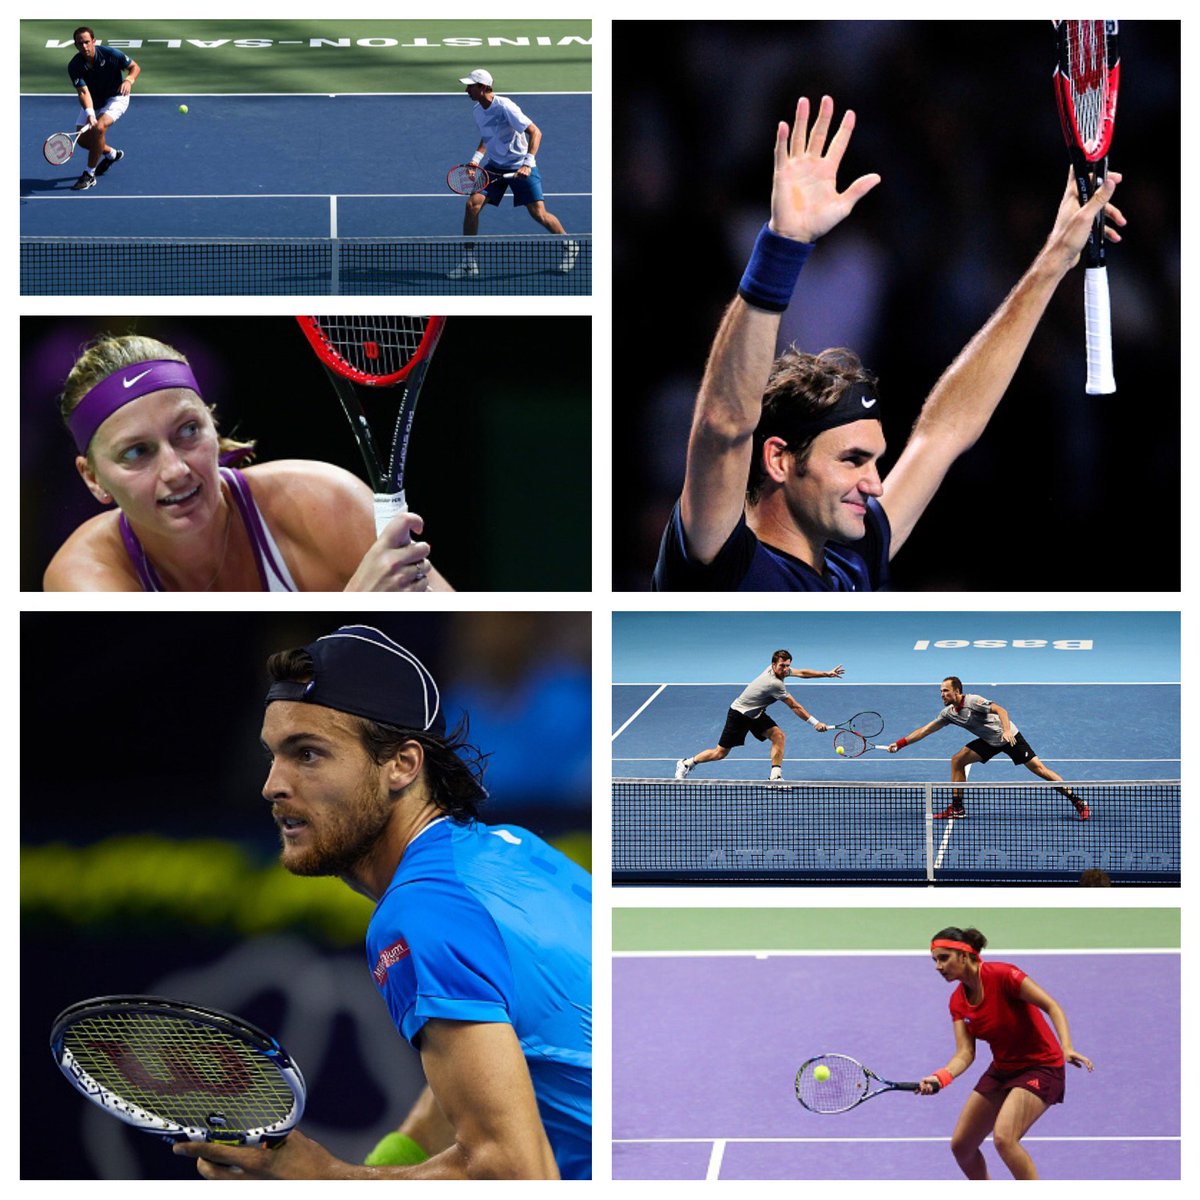 #WilsonTeam was @ their best this wknd! Federer, Kvitova, Mirza, Sousa, Peya, Soares,Butorac, Lipsky #JustToNameAFew